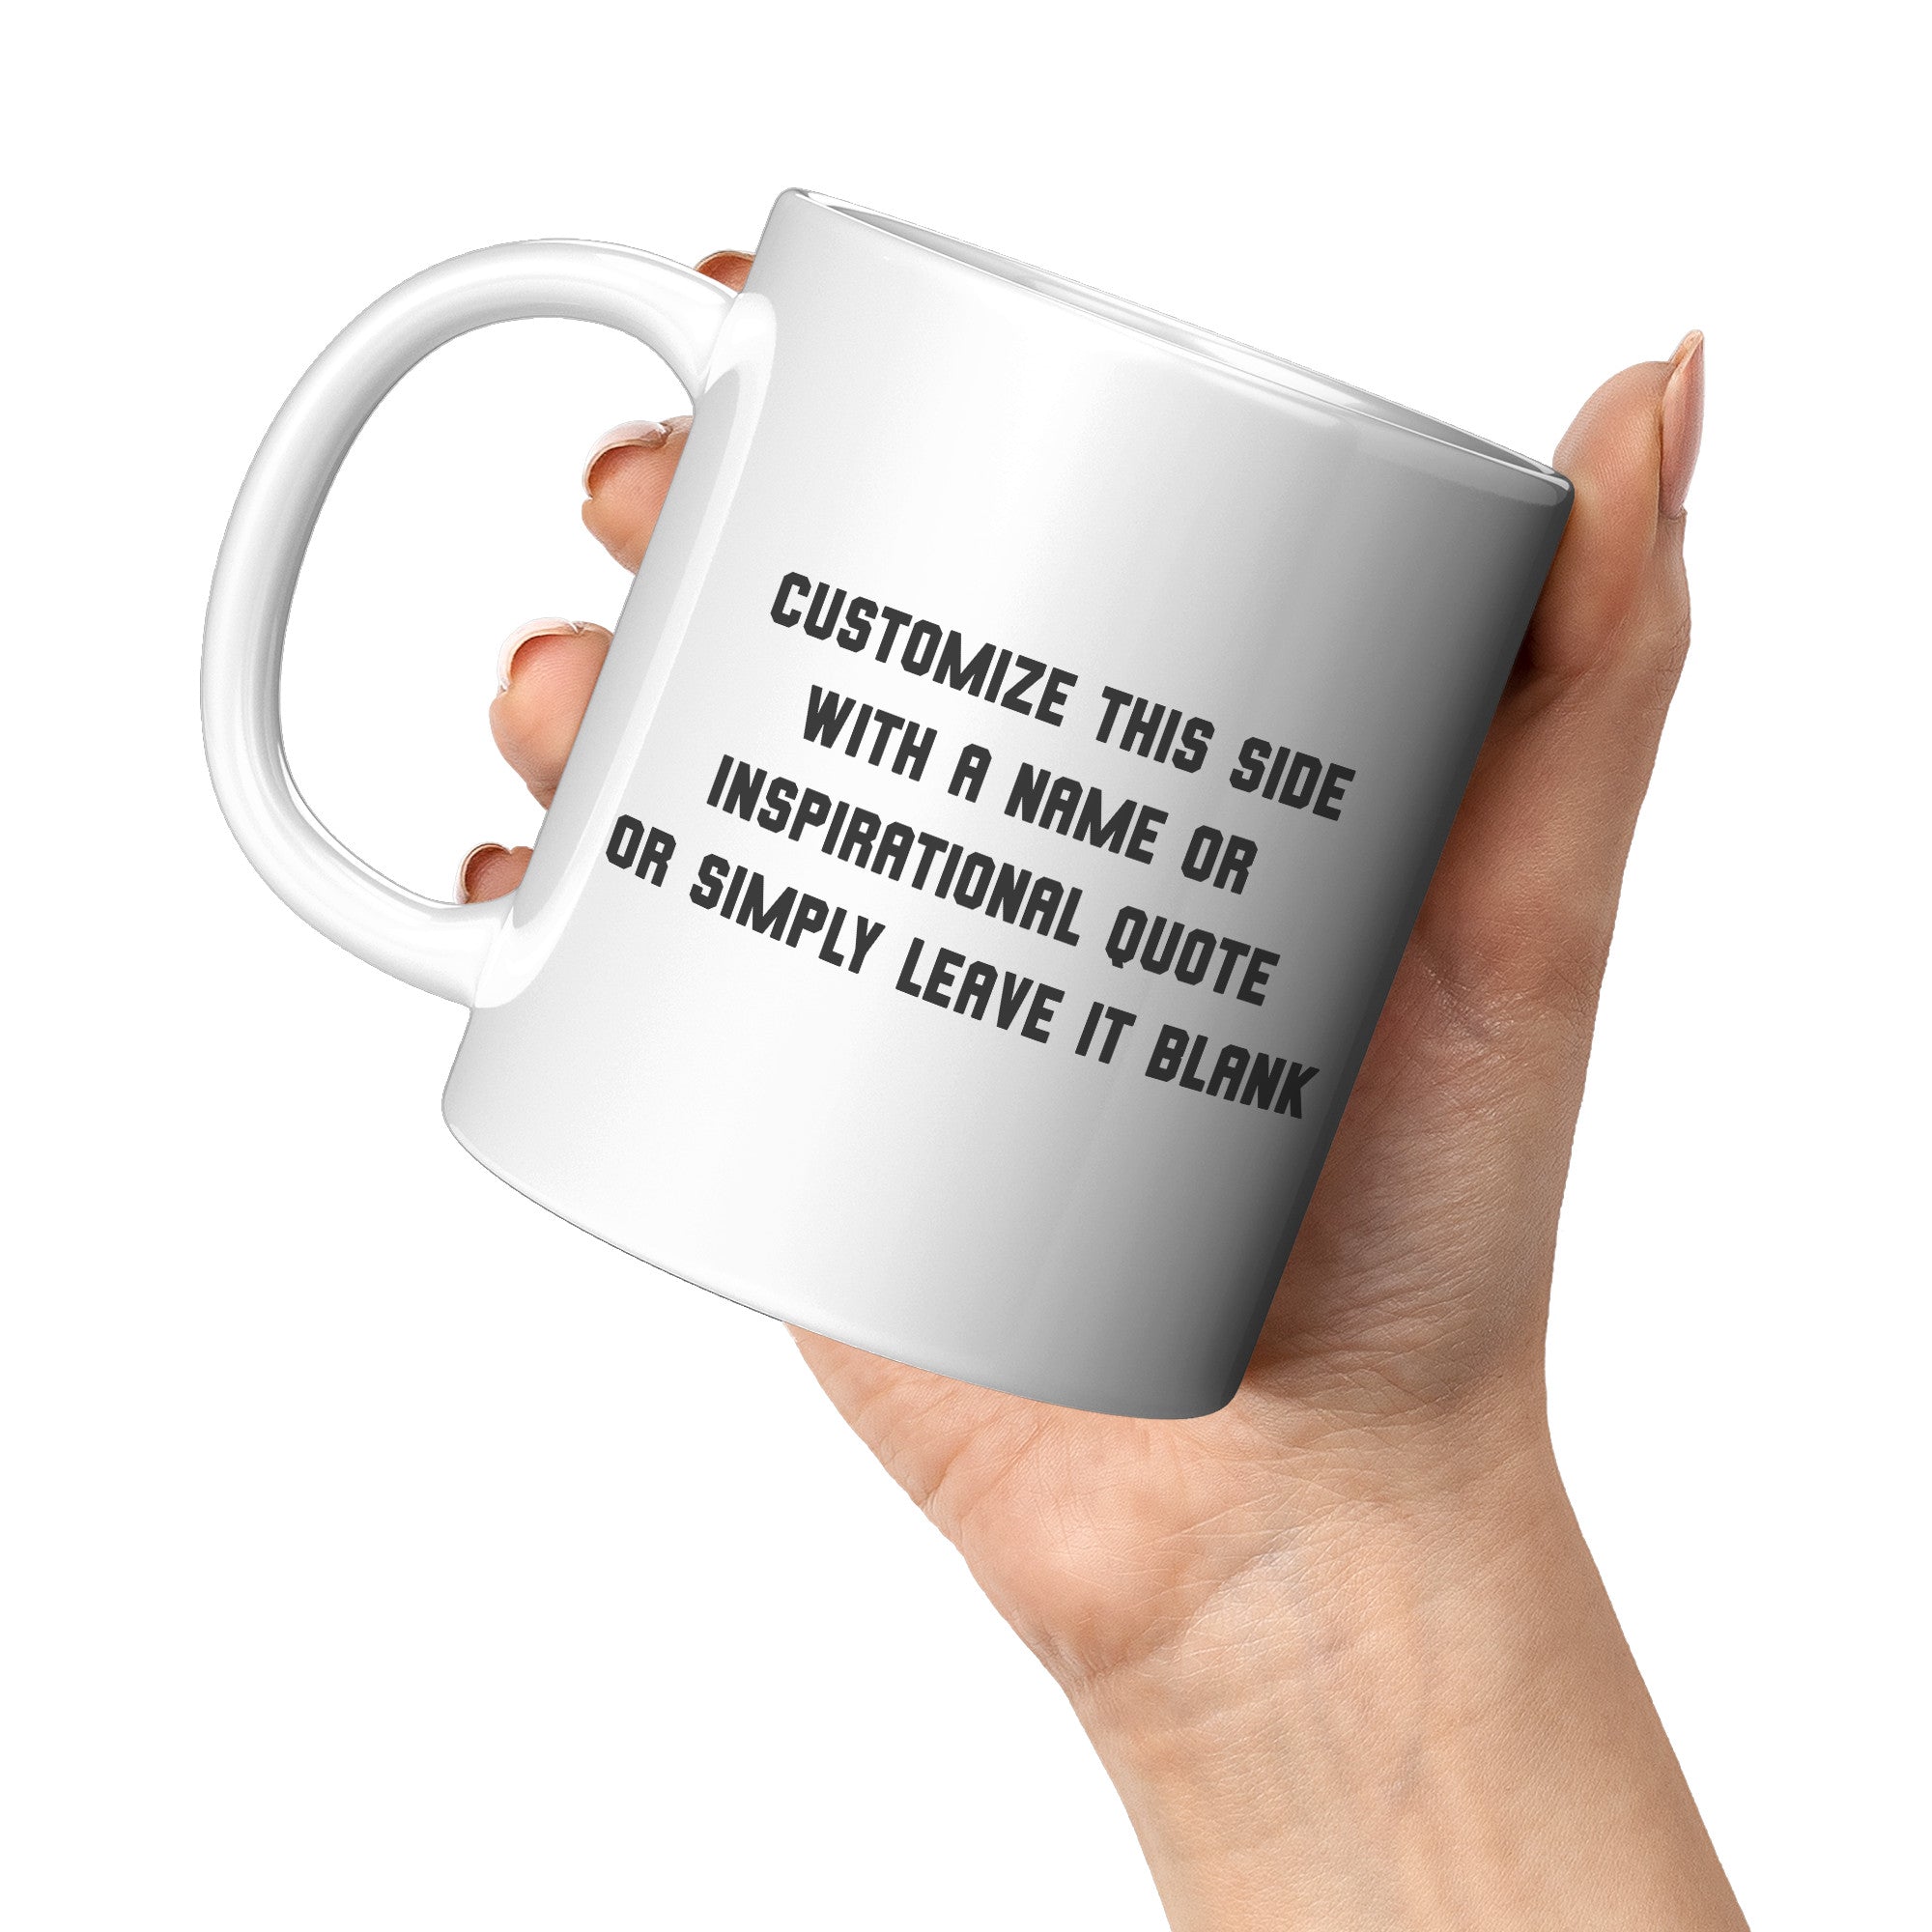 11oz Corgi Lover Cartoon Mug - Adorable Corgi Dog Mug - Perfect Gift for Corgi Owners - Cute Pembroke Welsh Corgi Mug" - D